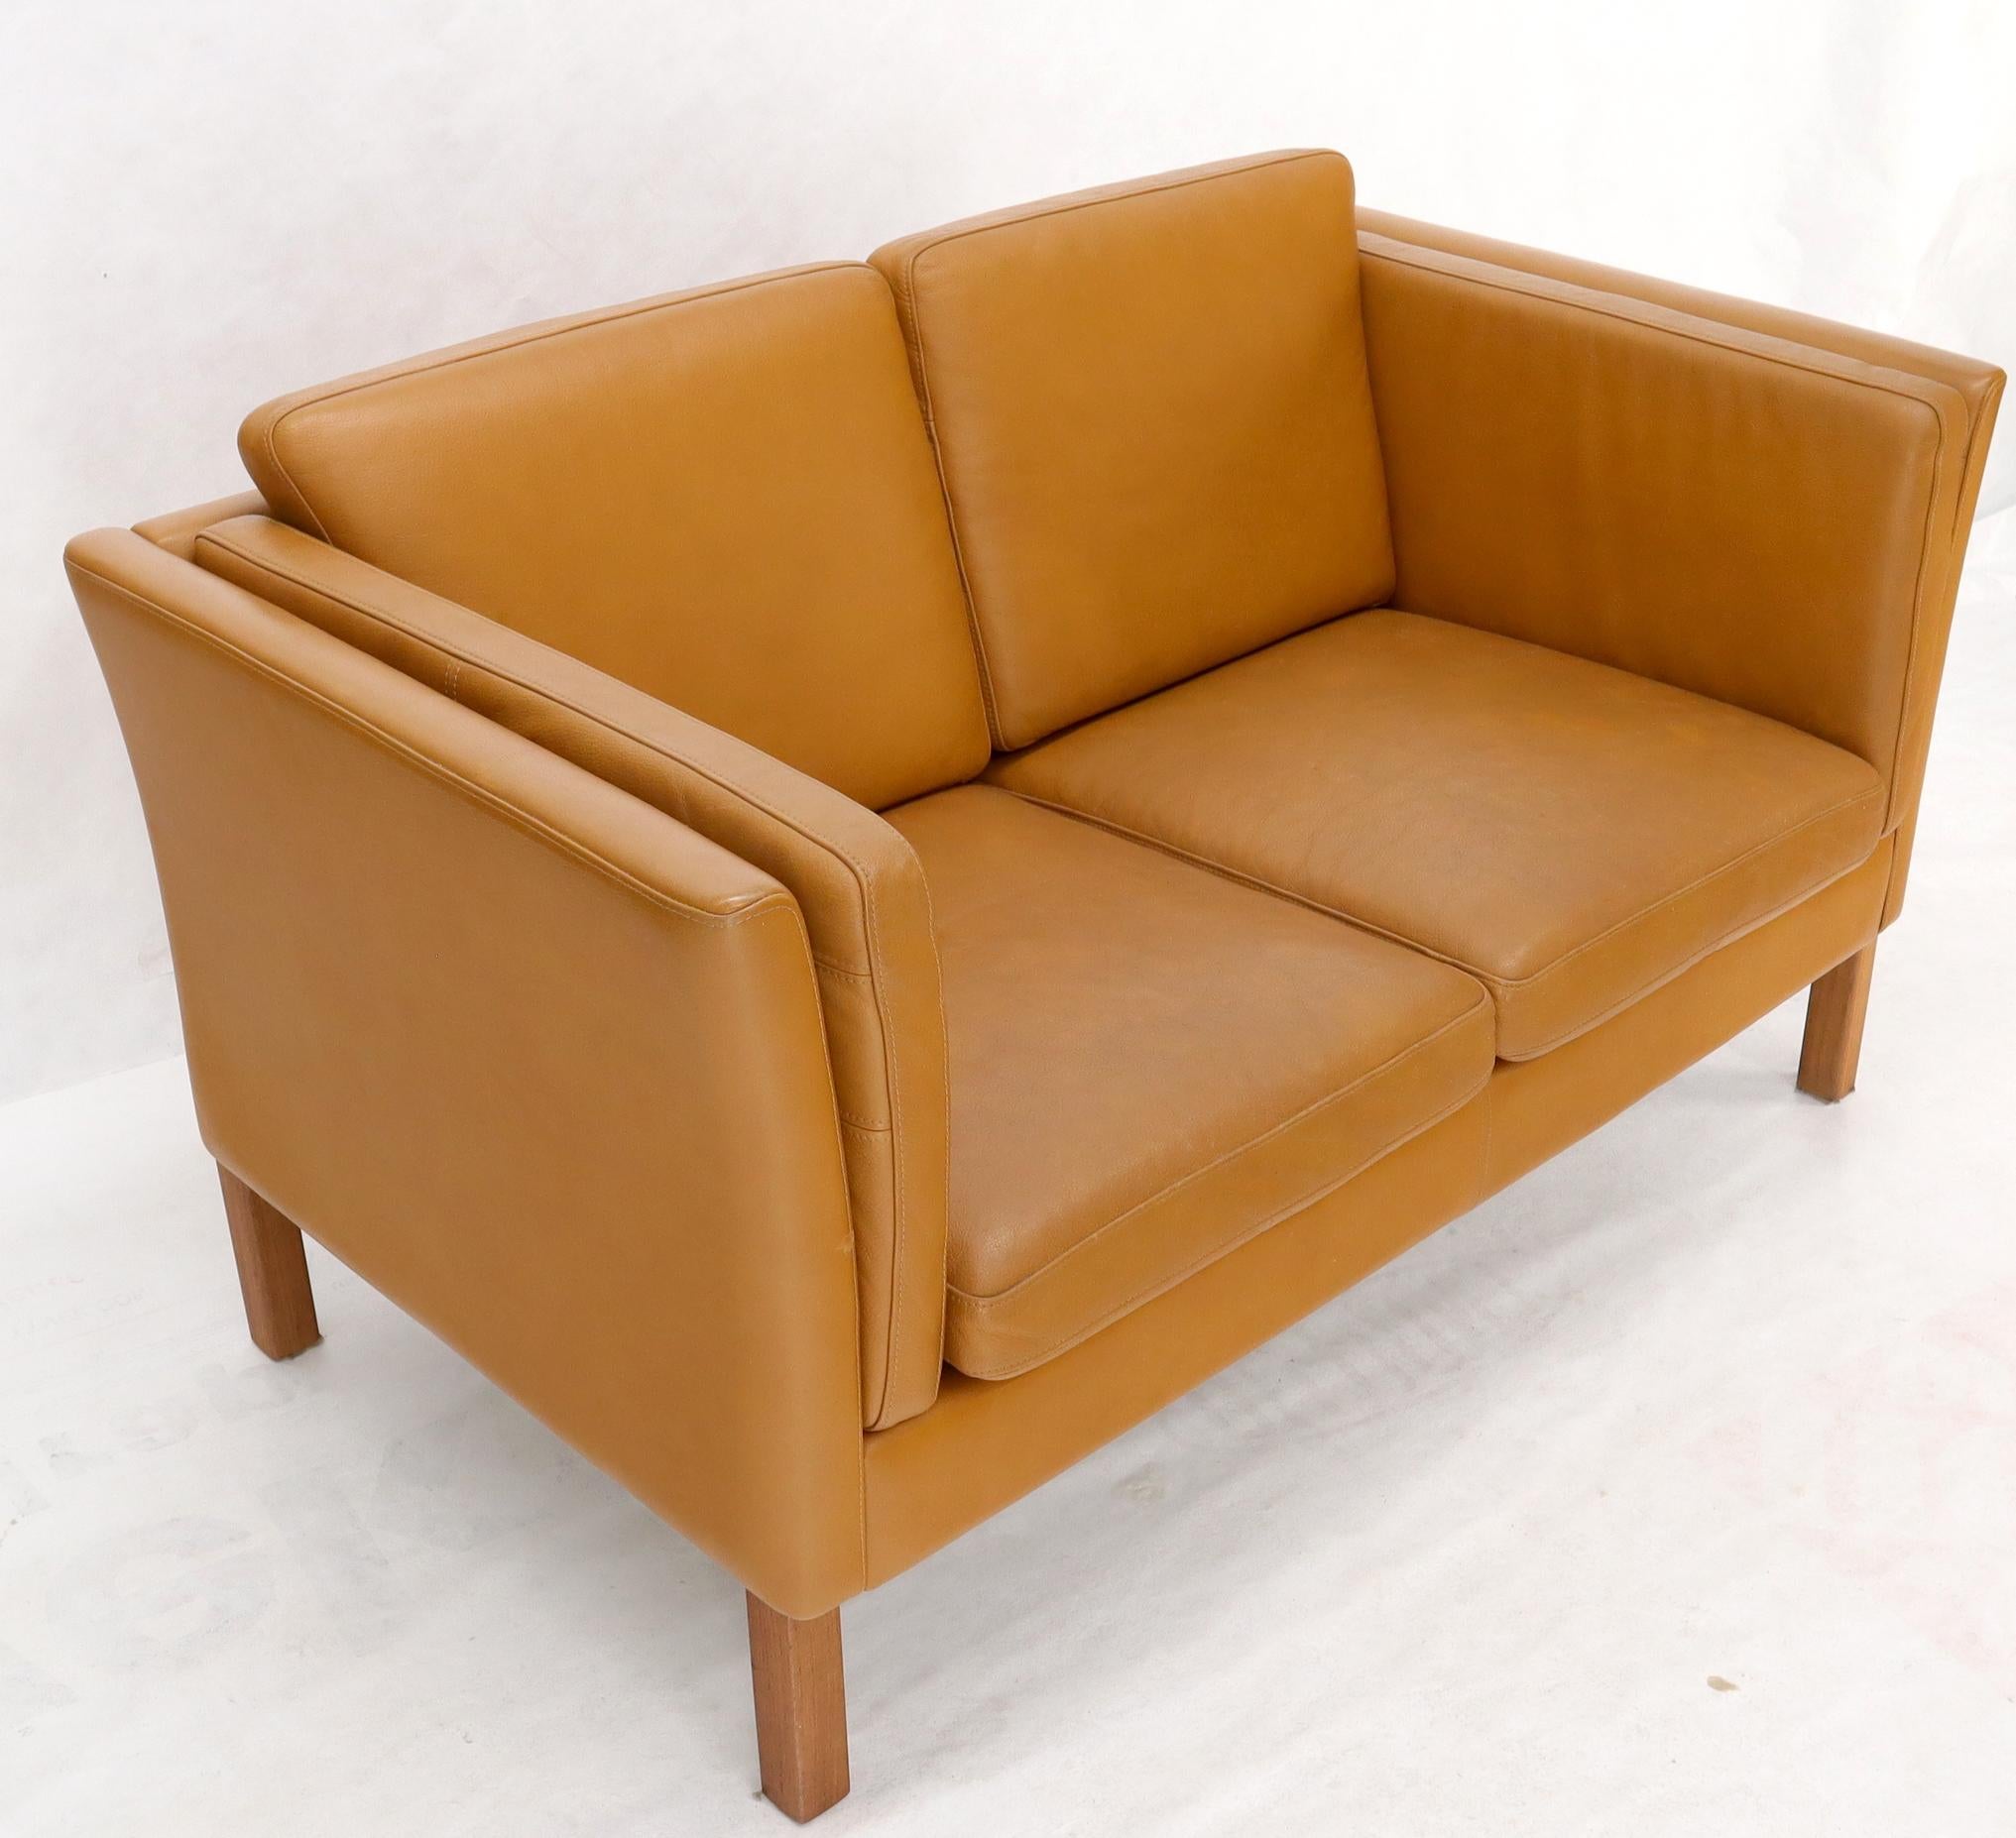 Danish Mid-Century Modern love seat sofa by Borge Mogensen.